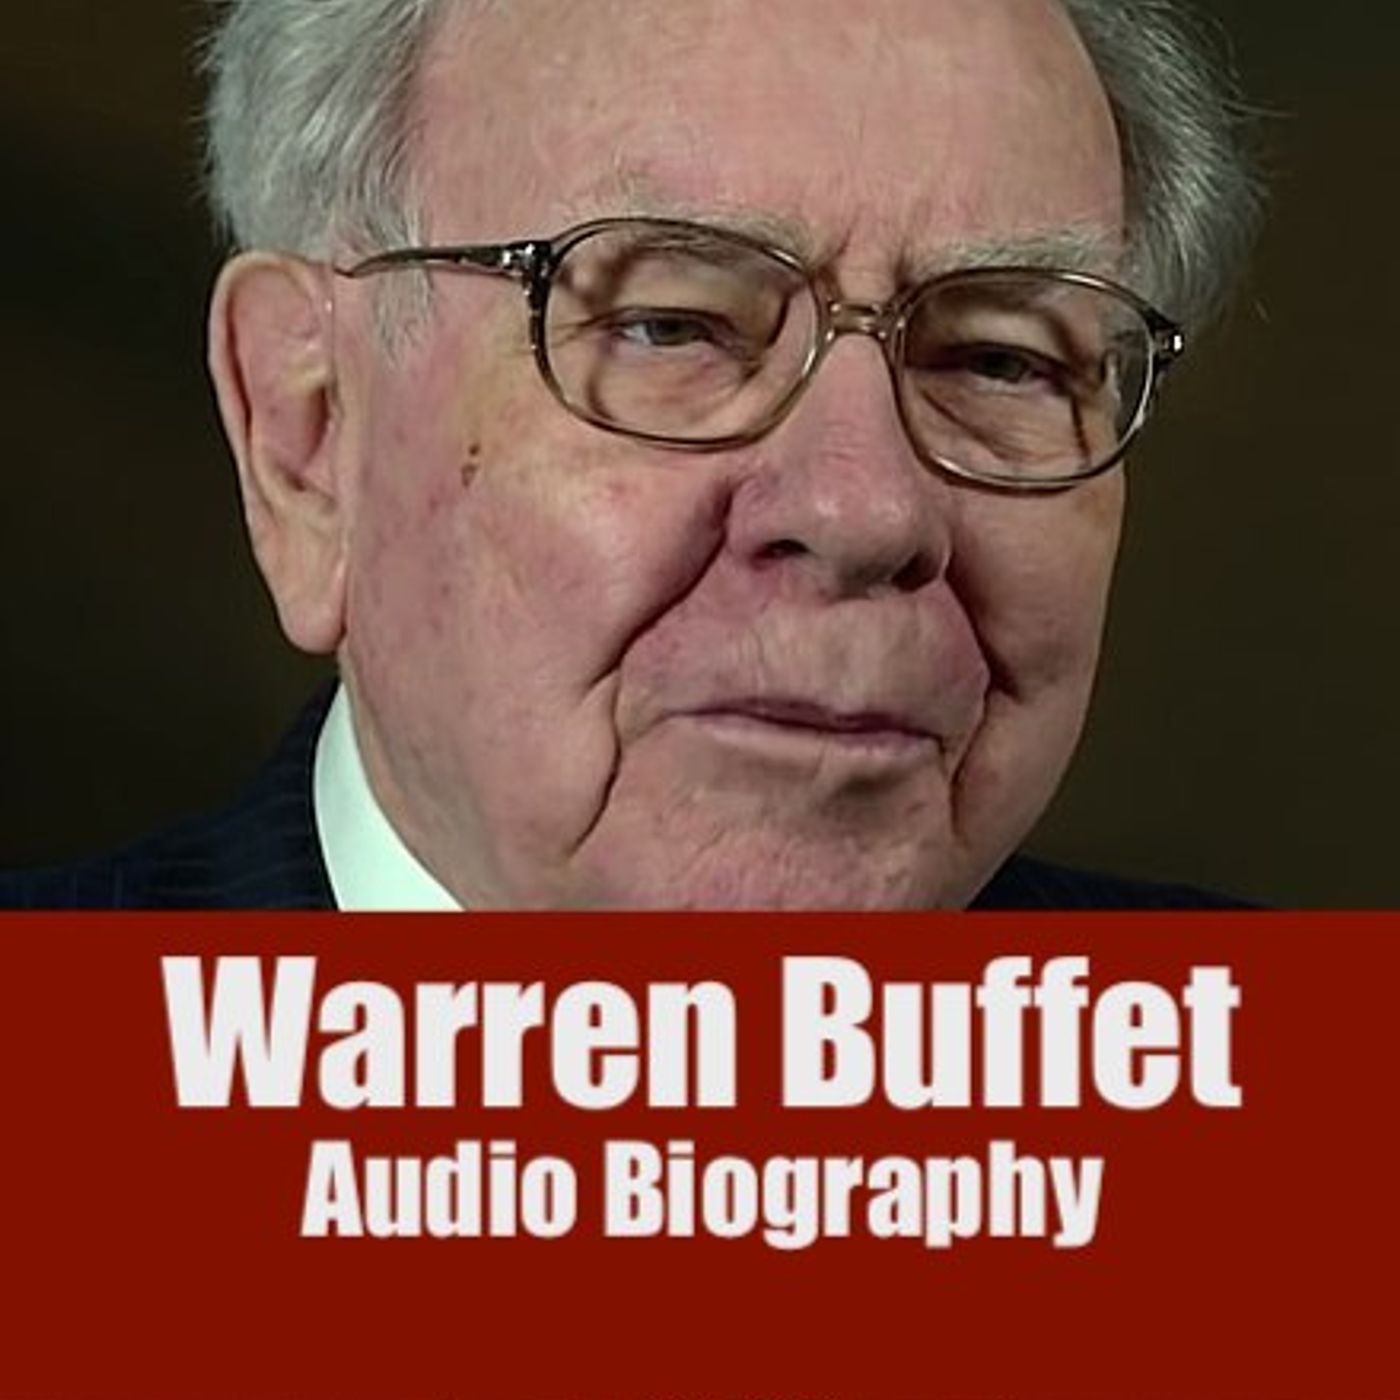 Warren Buffet - Audio Biography